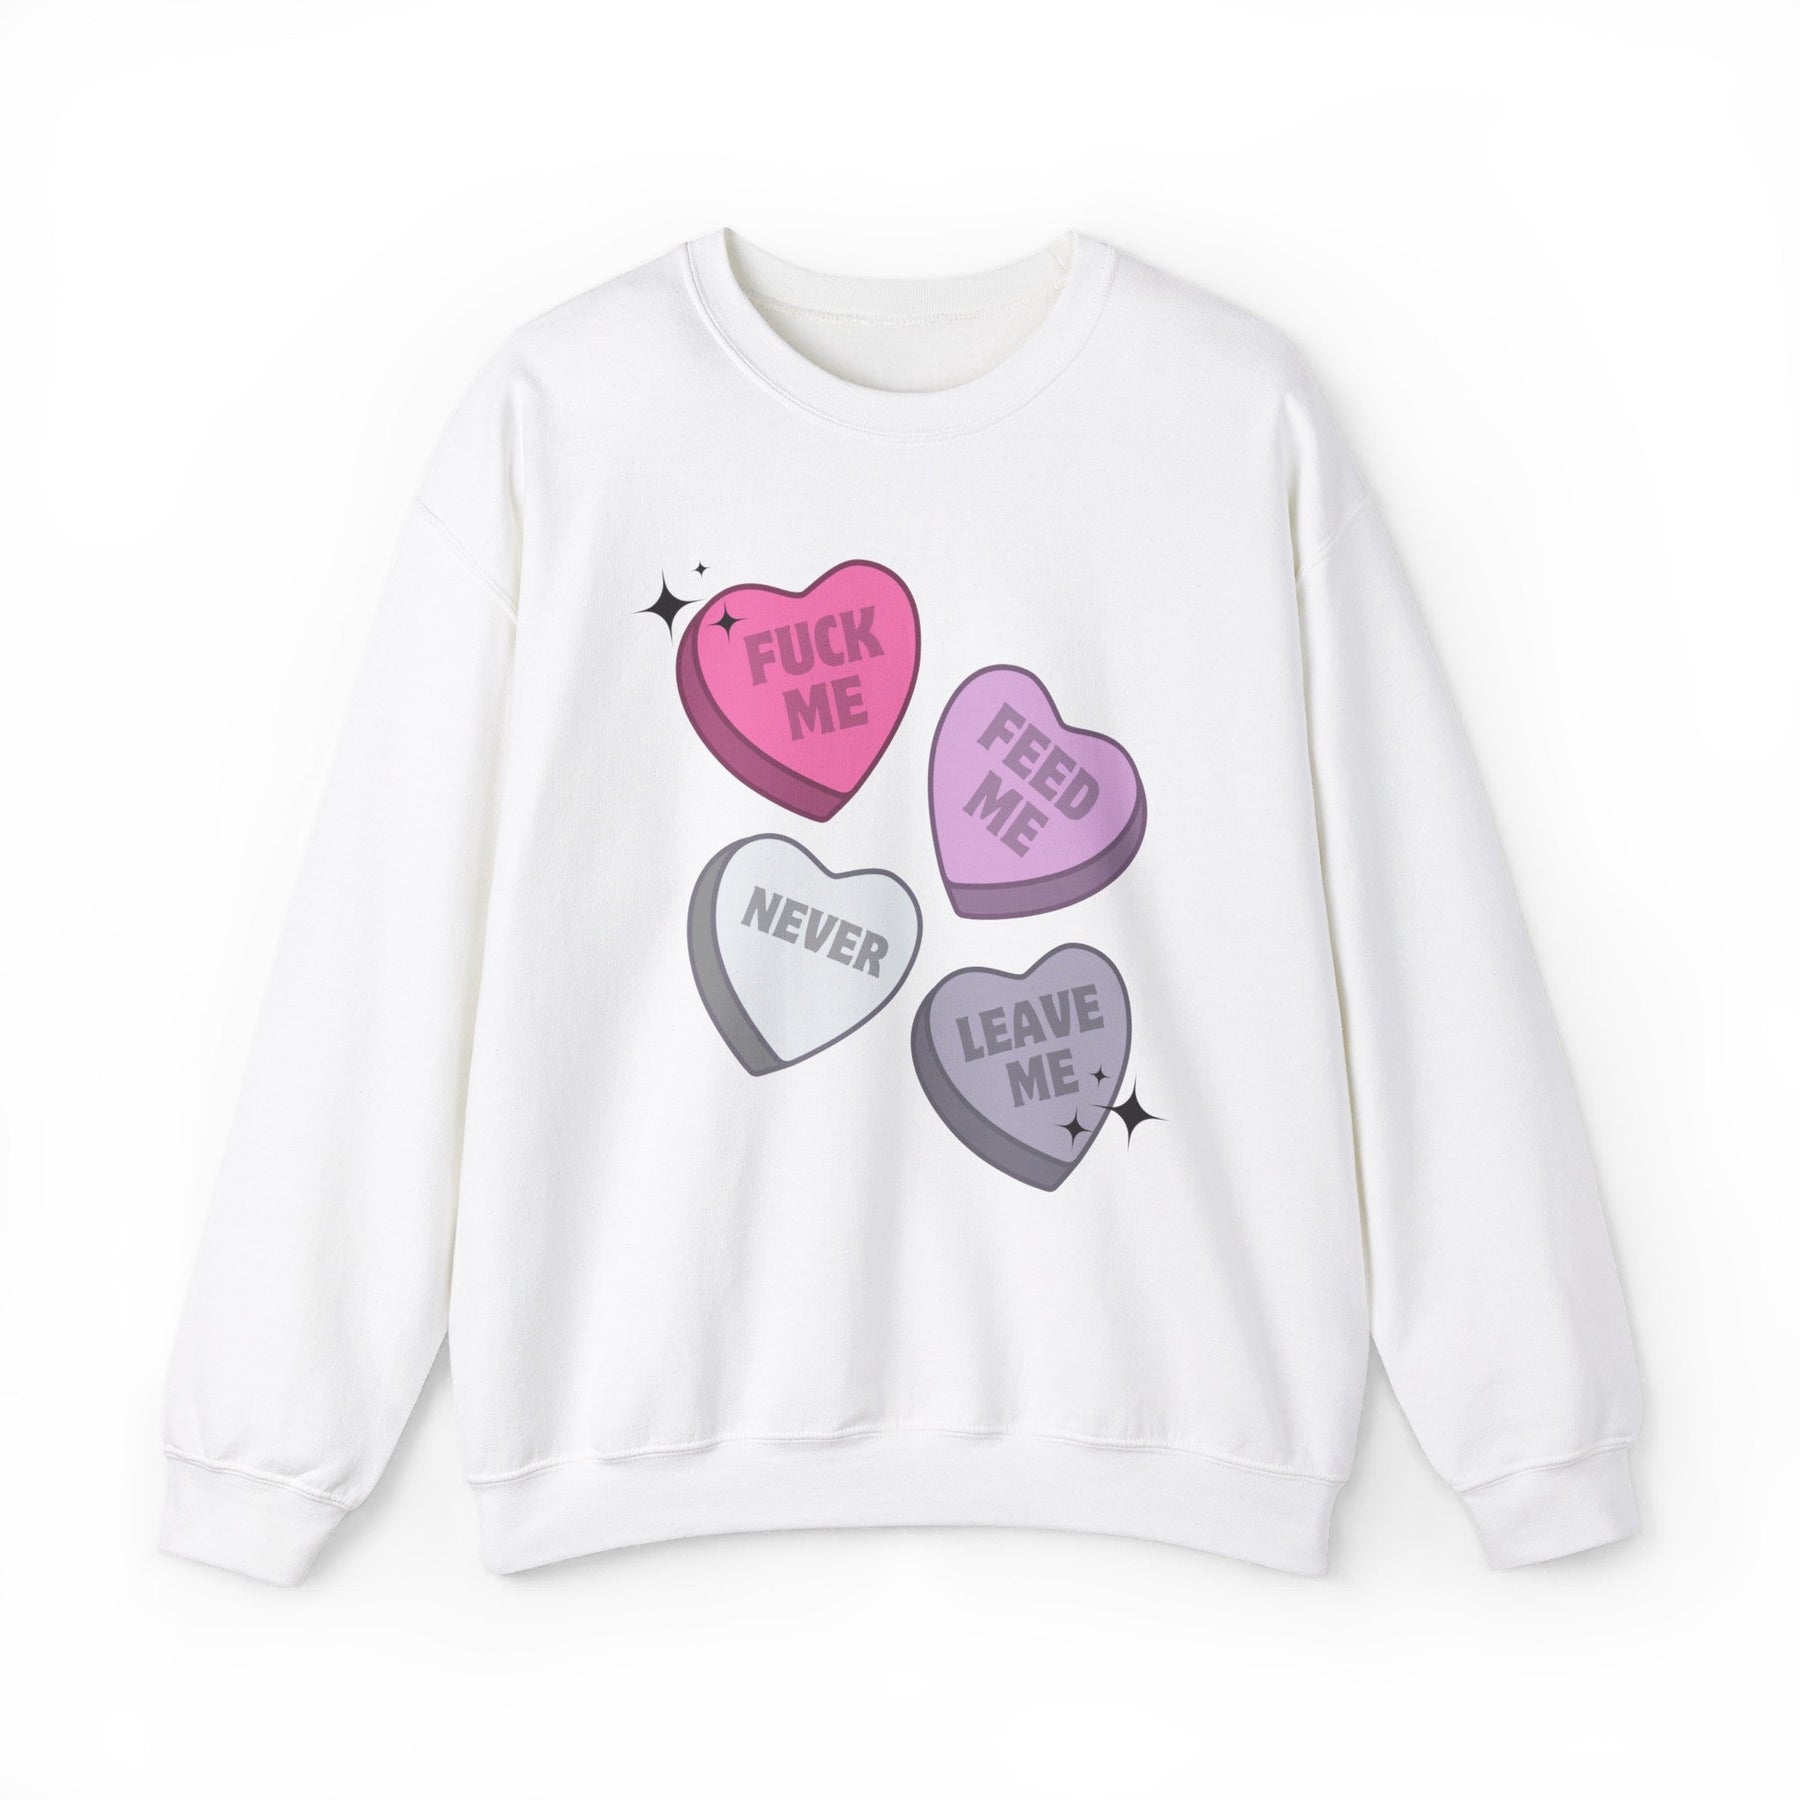 'F*ck Me, Feed Me, Never Leave Me' Candy Hearts Crewneck Sweatshirt - Goth Cloth Co.Sweatshirt51204346620160930636